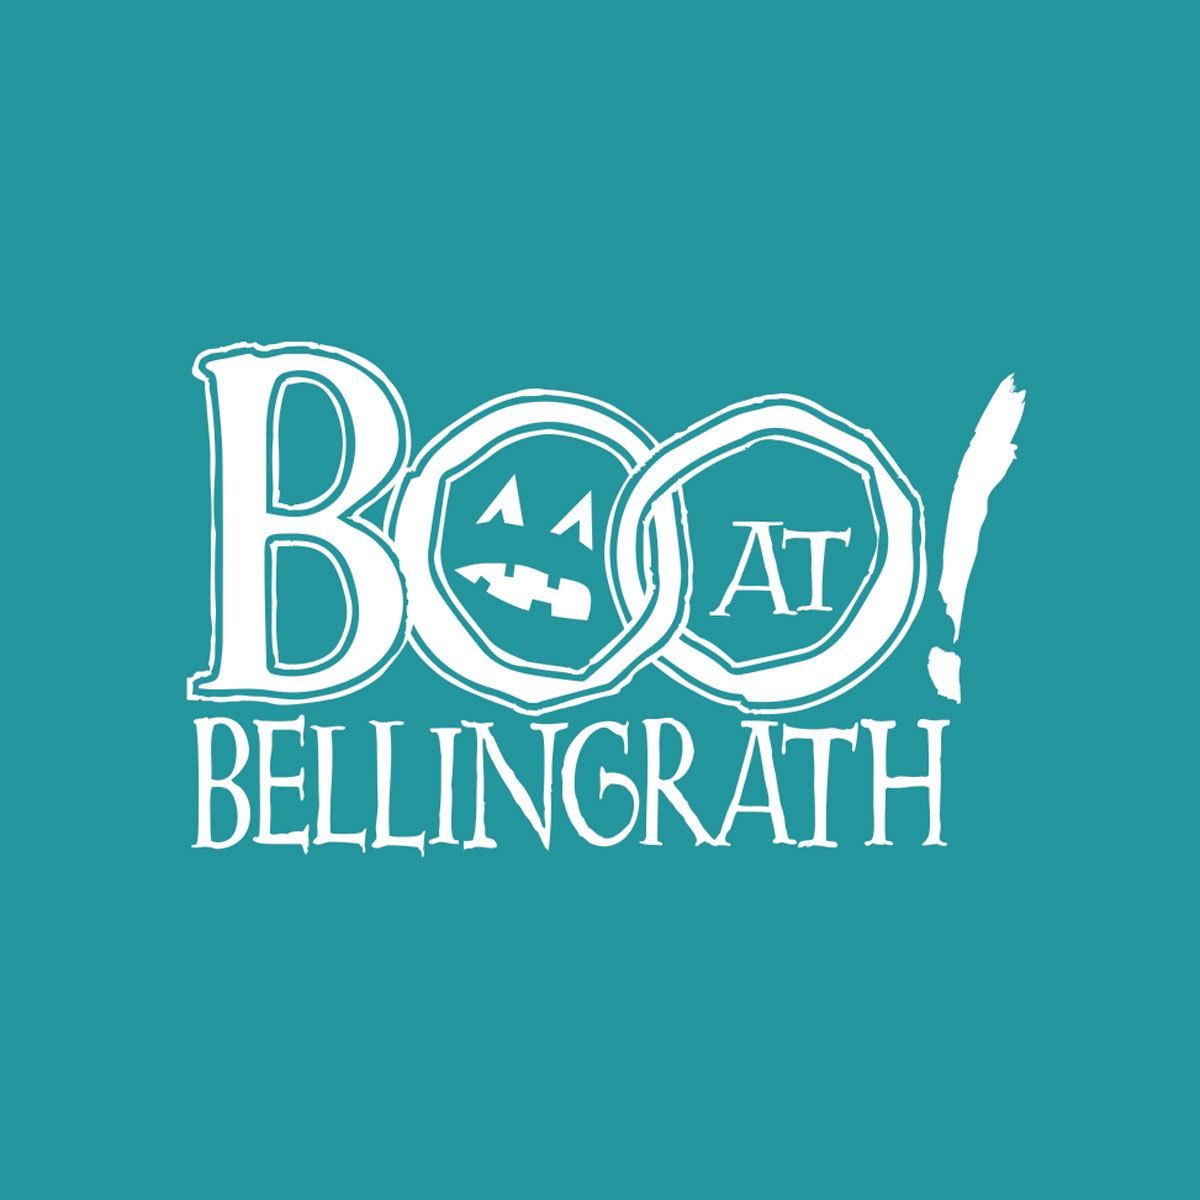 Boo at Bellingrath